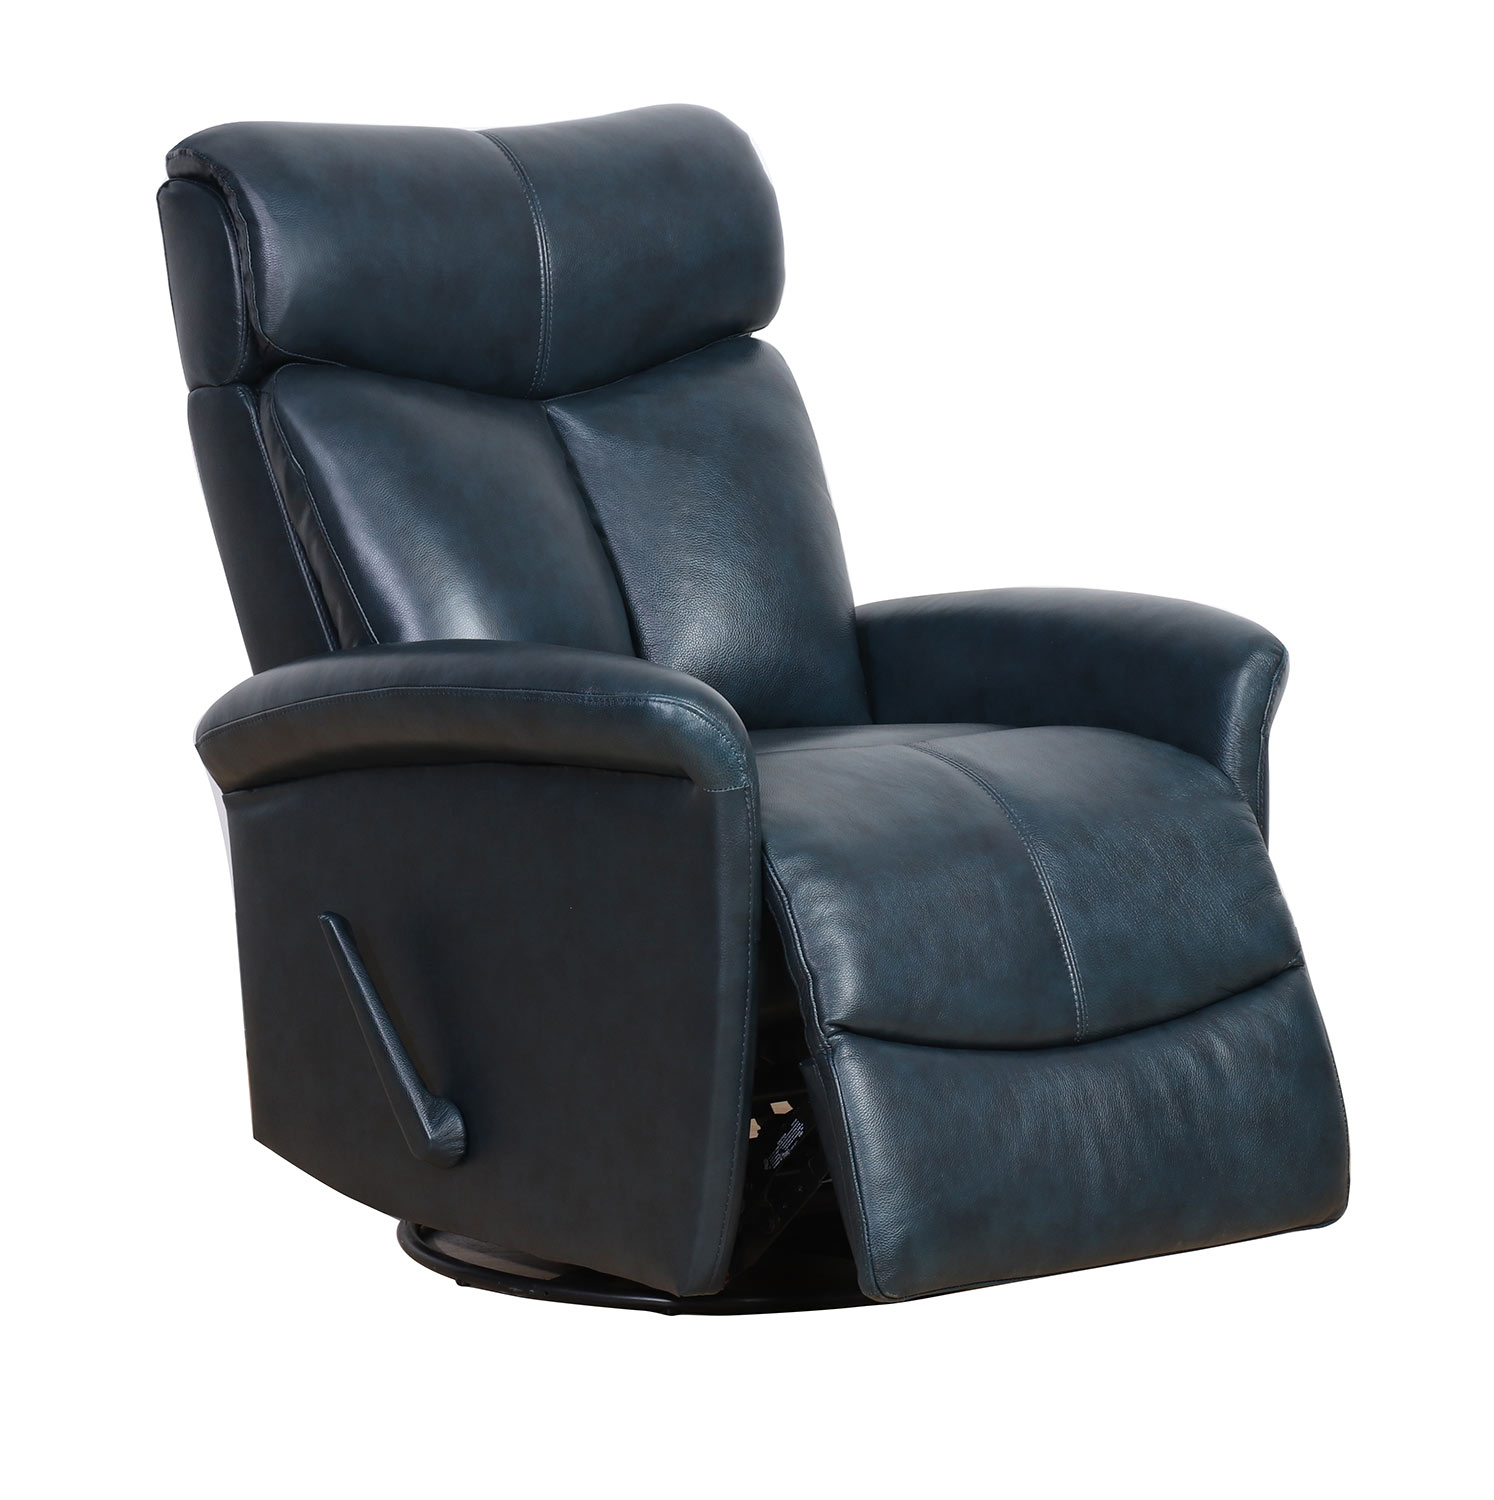 Barcalounger Diego Swivel Glider Recliner Chair - Ryegate Sapphire Blue